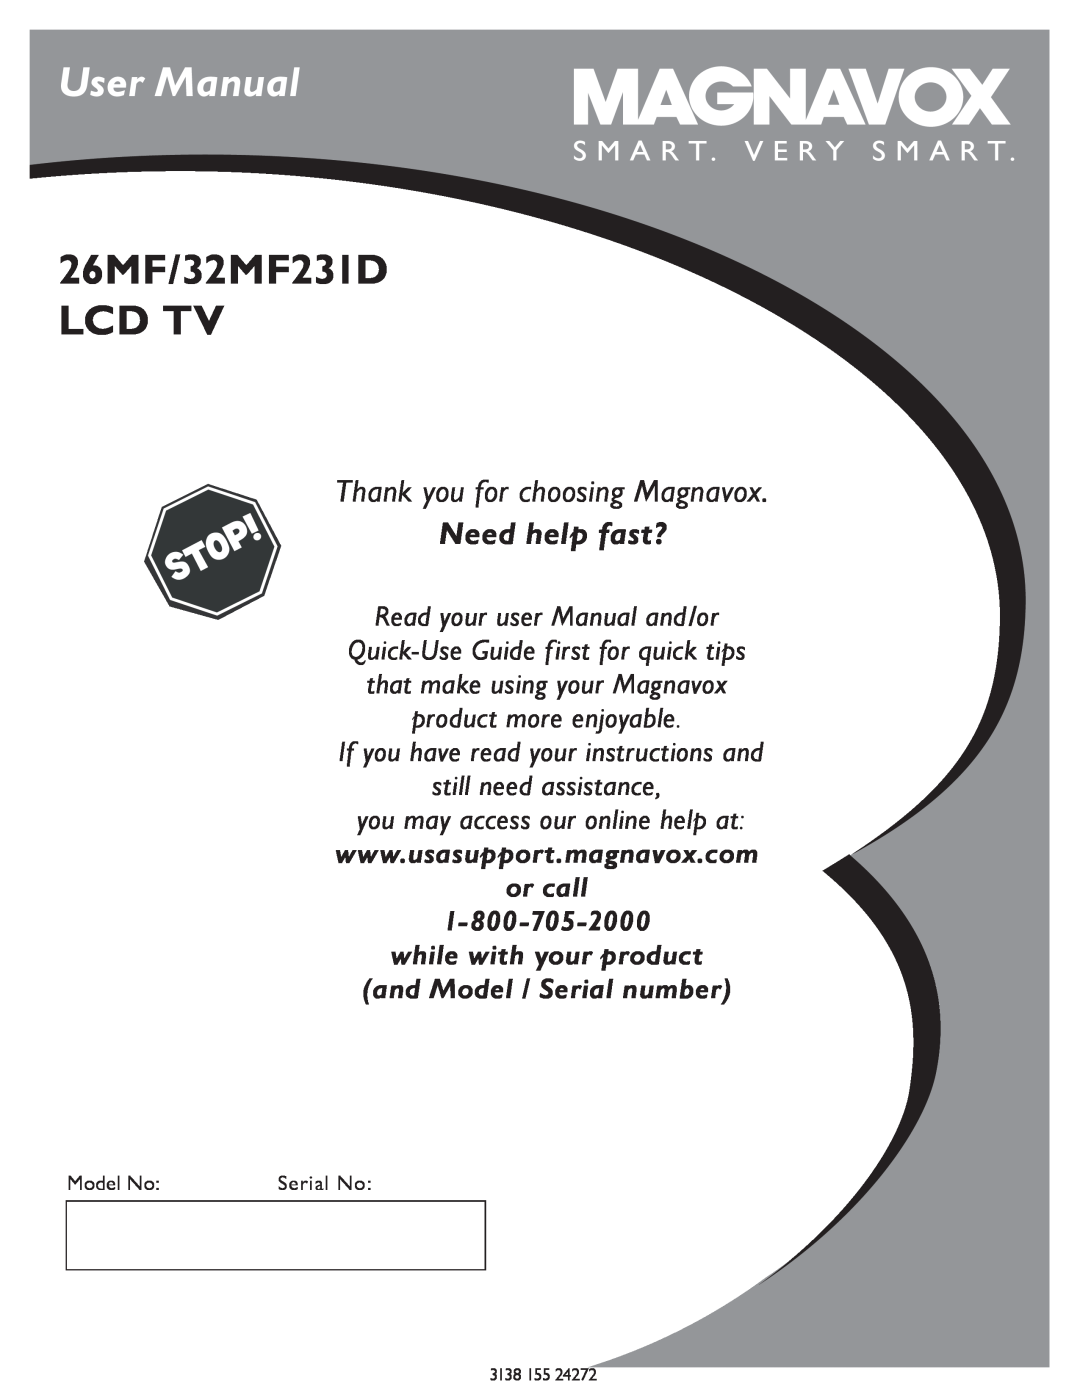 Magnavox user manual User Manual, 26MF/32MF231D LCD TV, Thank you for choosing Magnavox, Need help fast?, or call 